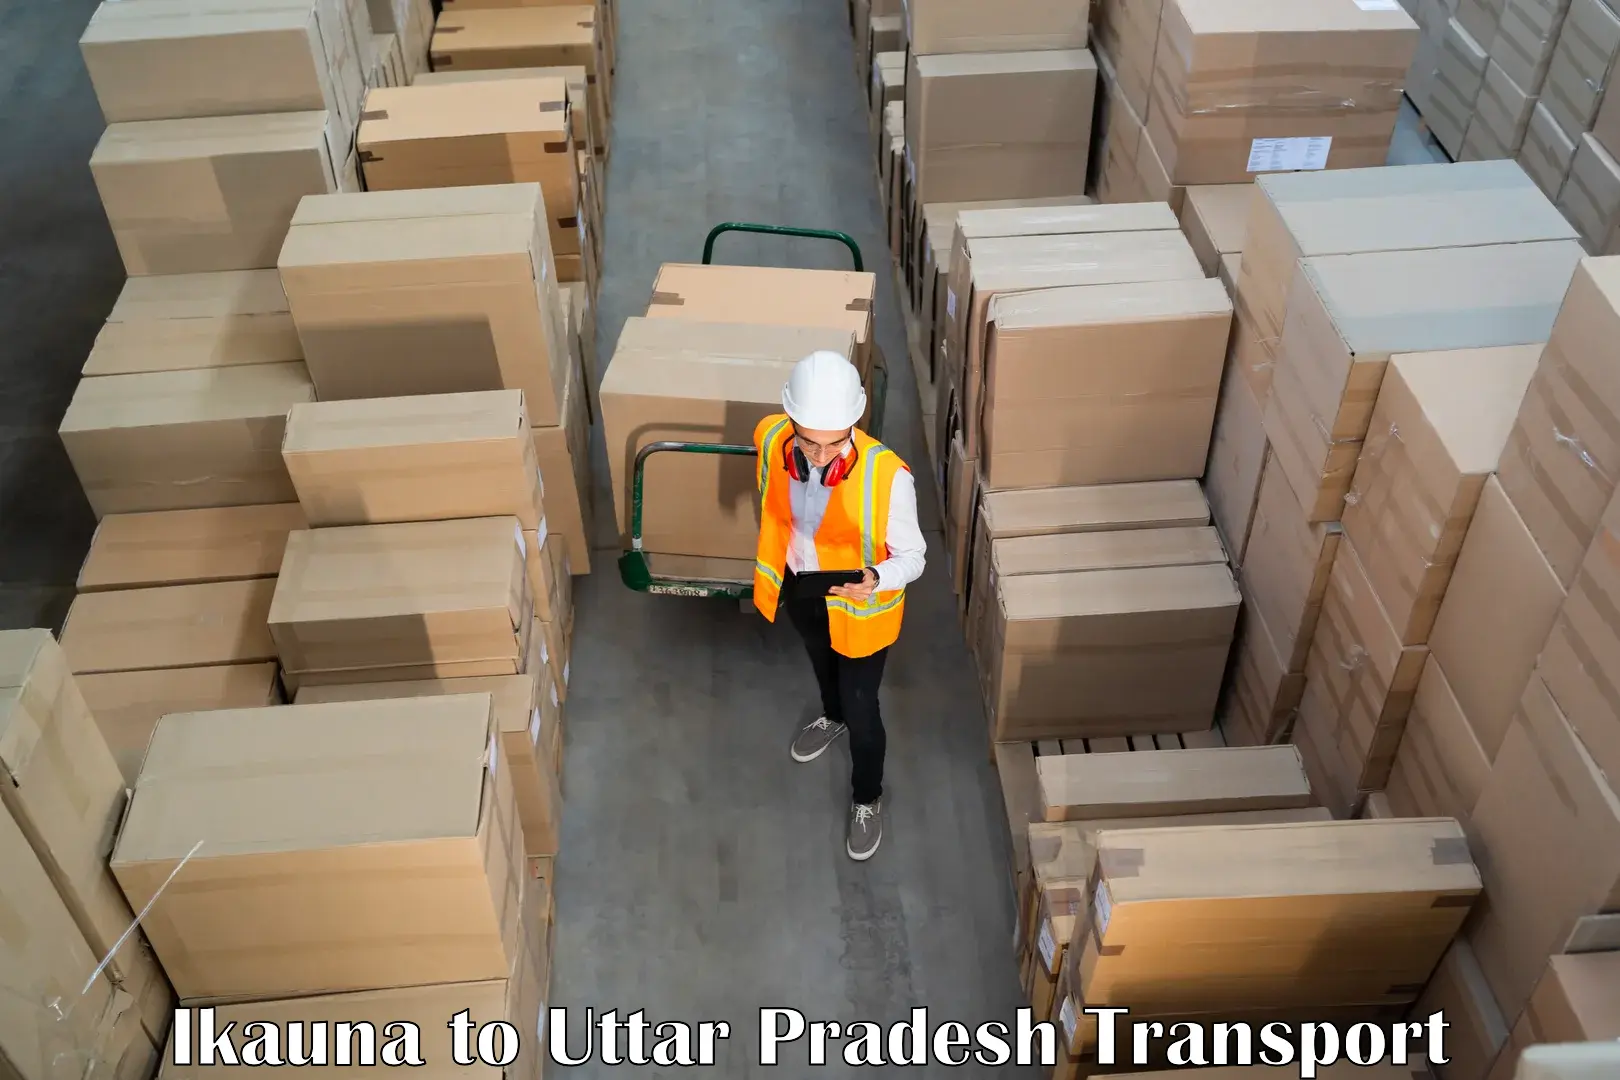 Truck transport companies in India Ikauna to Anpara